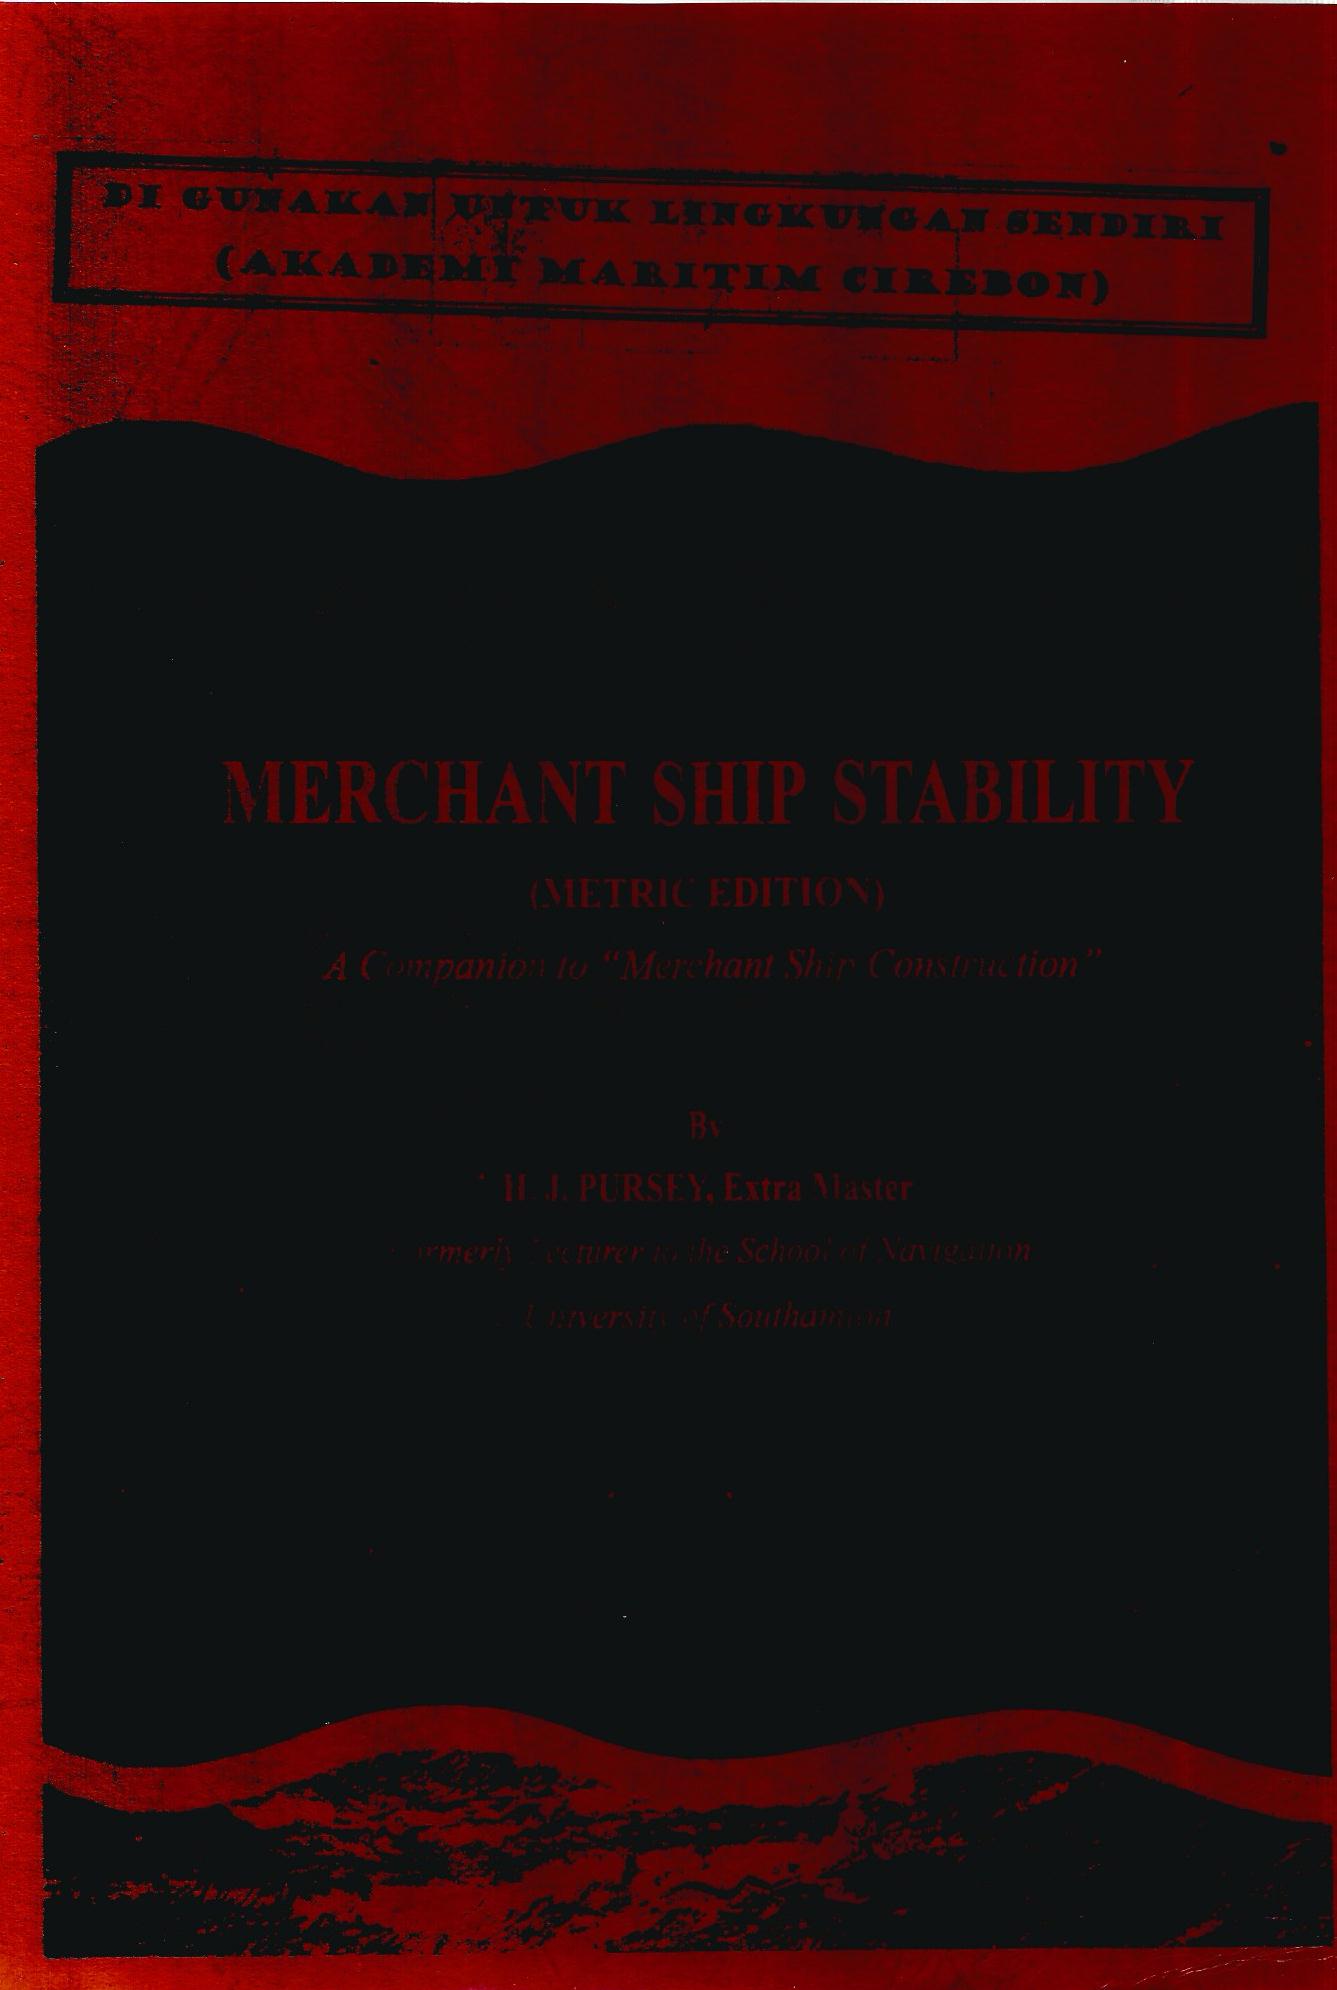 MERCHANT SHIP STABILITY